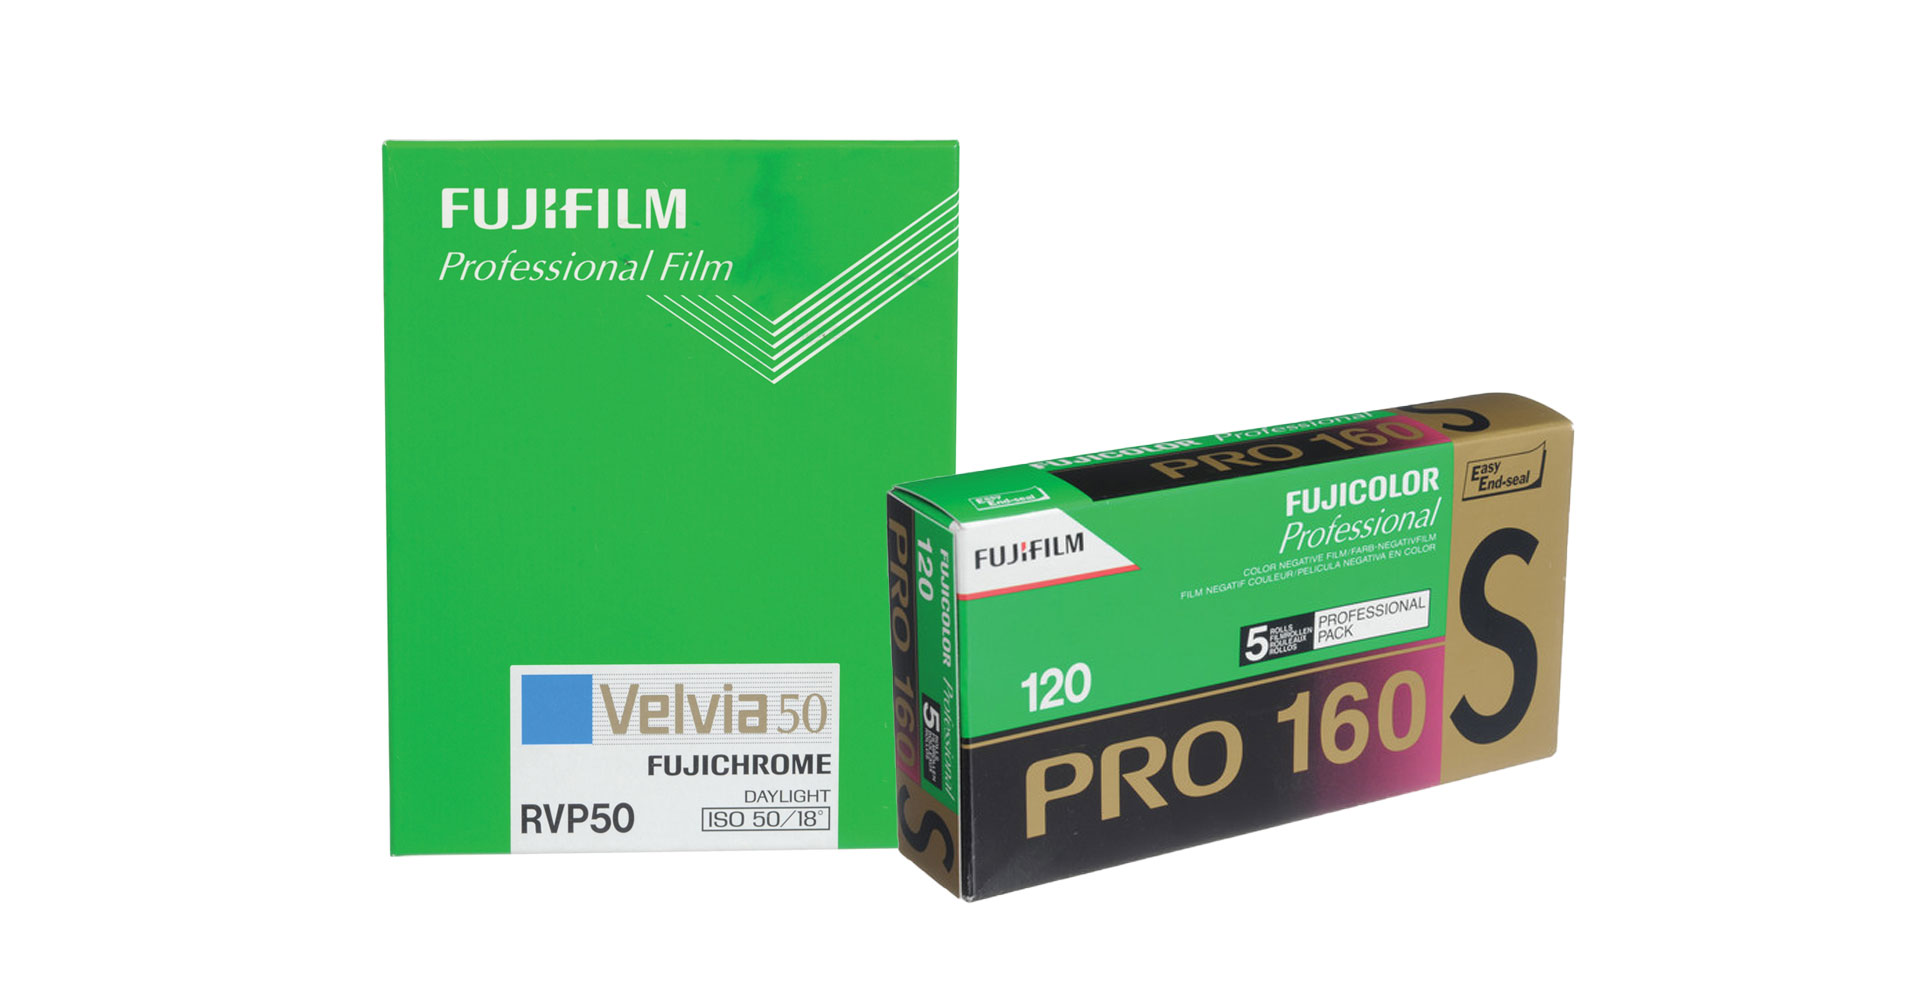 FUJIFILM ประกาศยุติการผลิตฟิล์ม Fujicolor PRO 160NS 120 และ Fujichrome VELVIA50 CUT size 